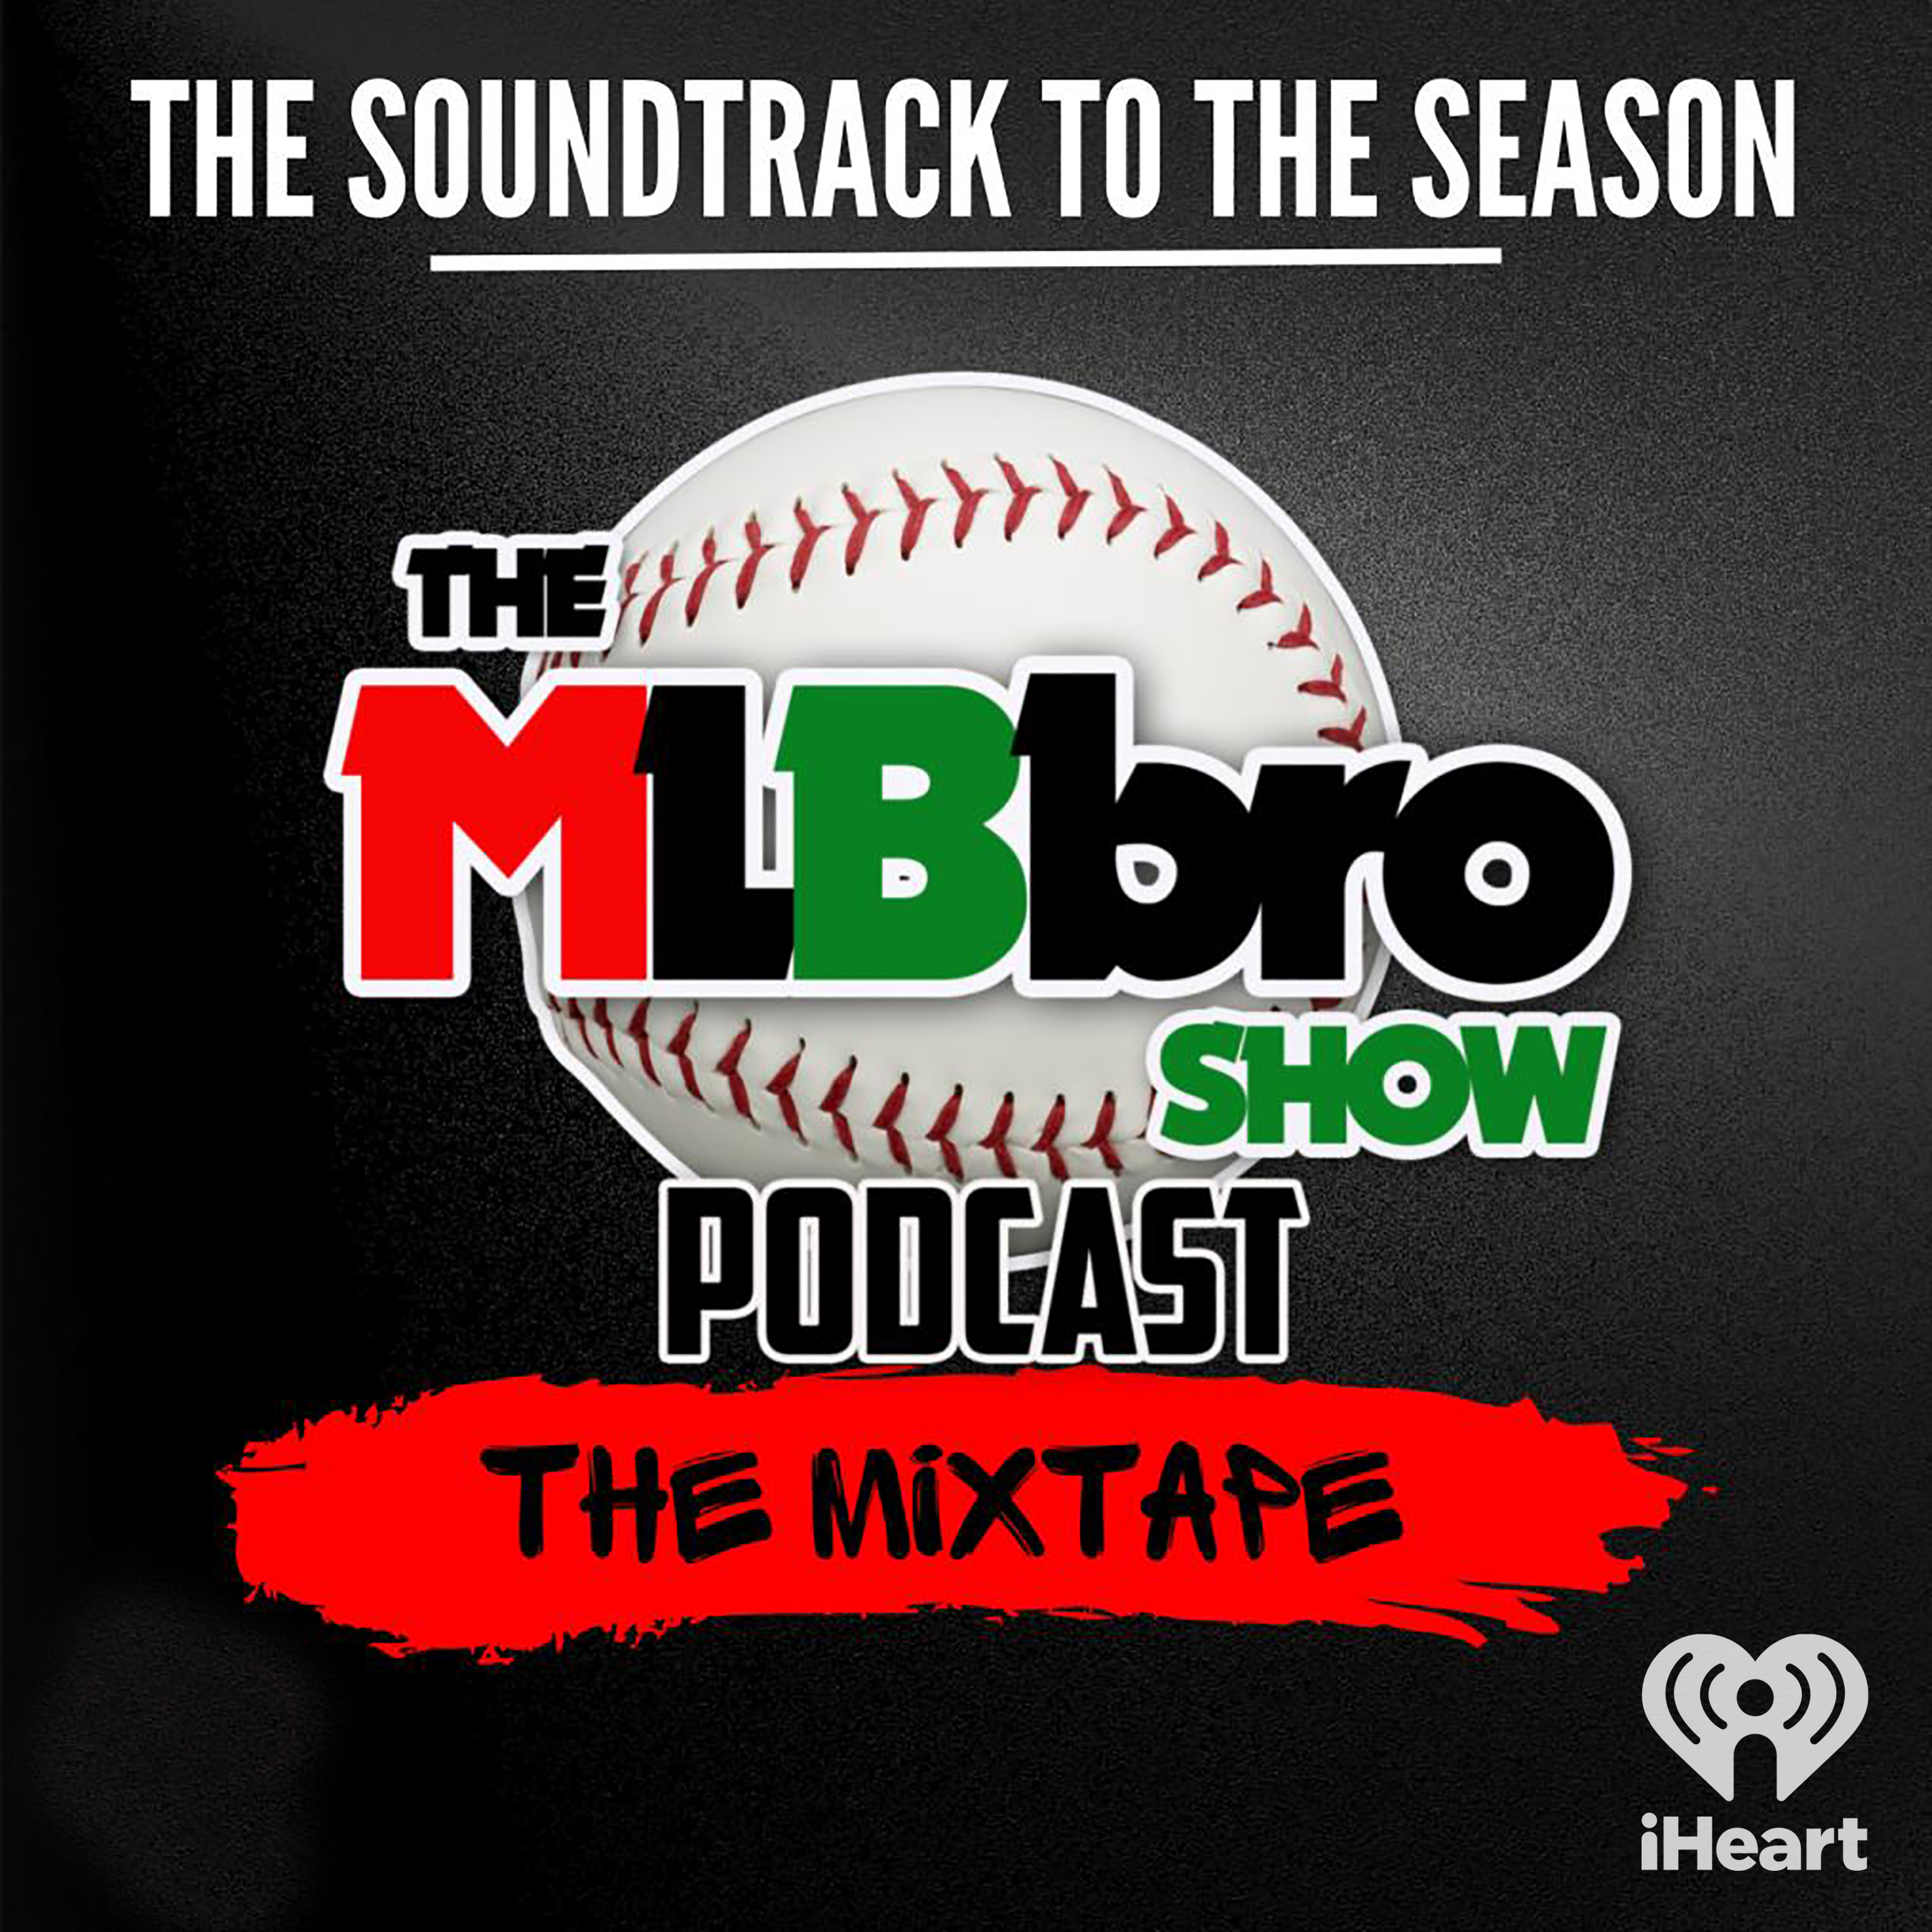 MLBbro Show Podcast The Mixtape Vol 4 Episode 1